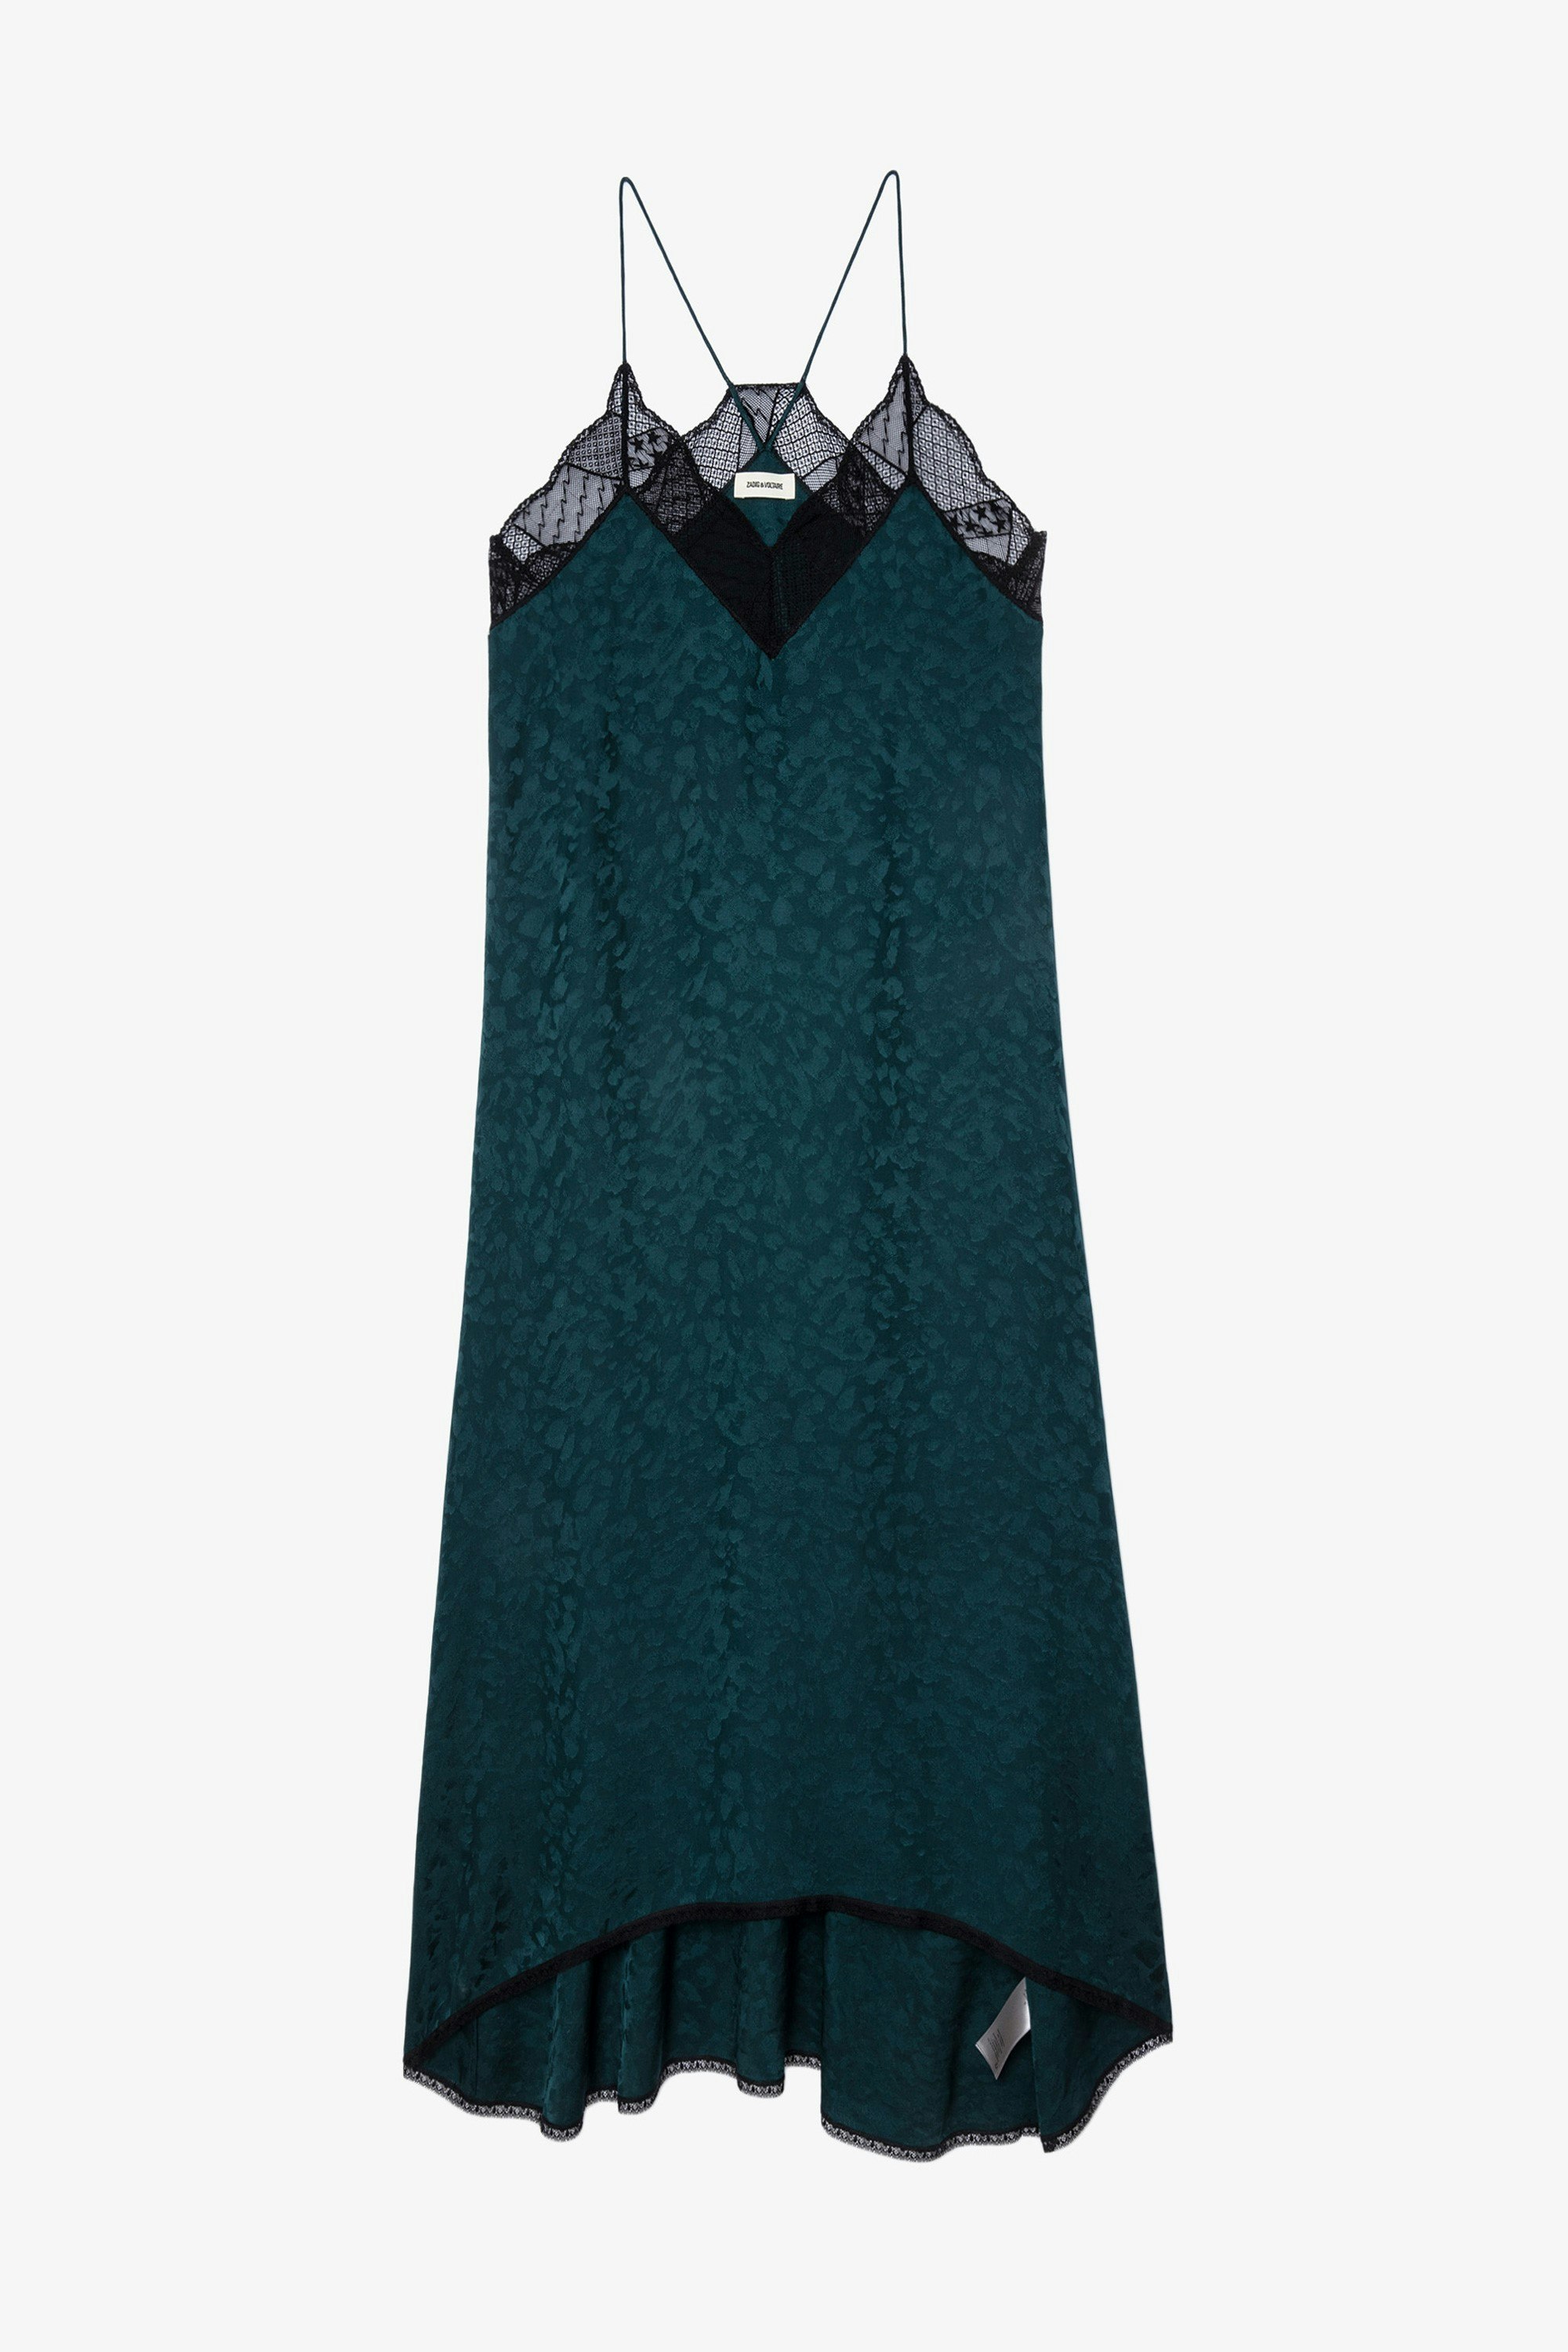 Risty Jac Leo シルク ワンピース Women’s green silk dress with leopard-print jacquard